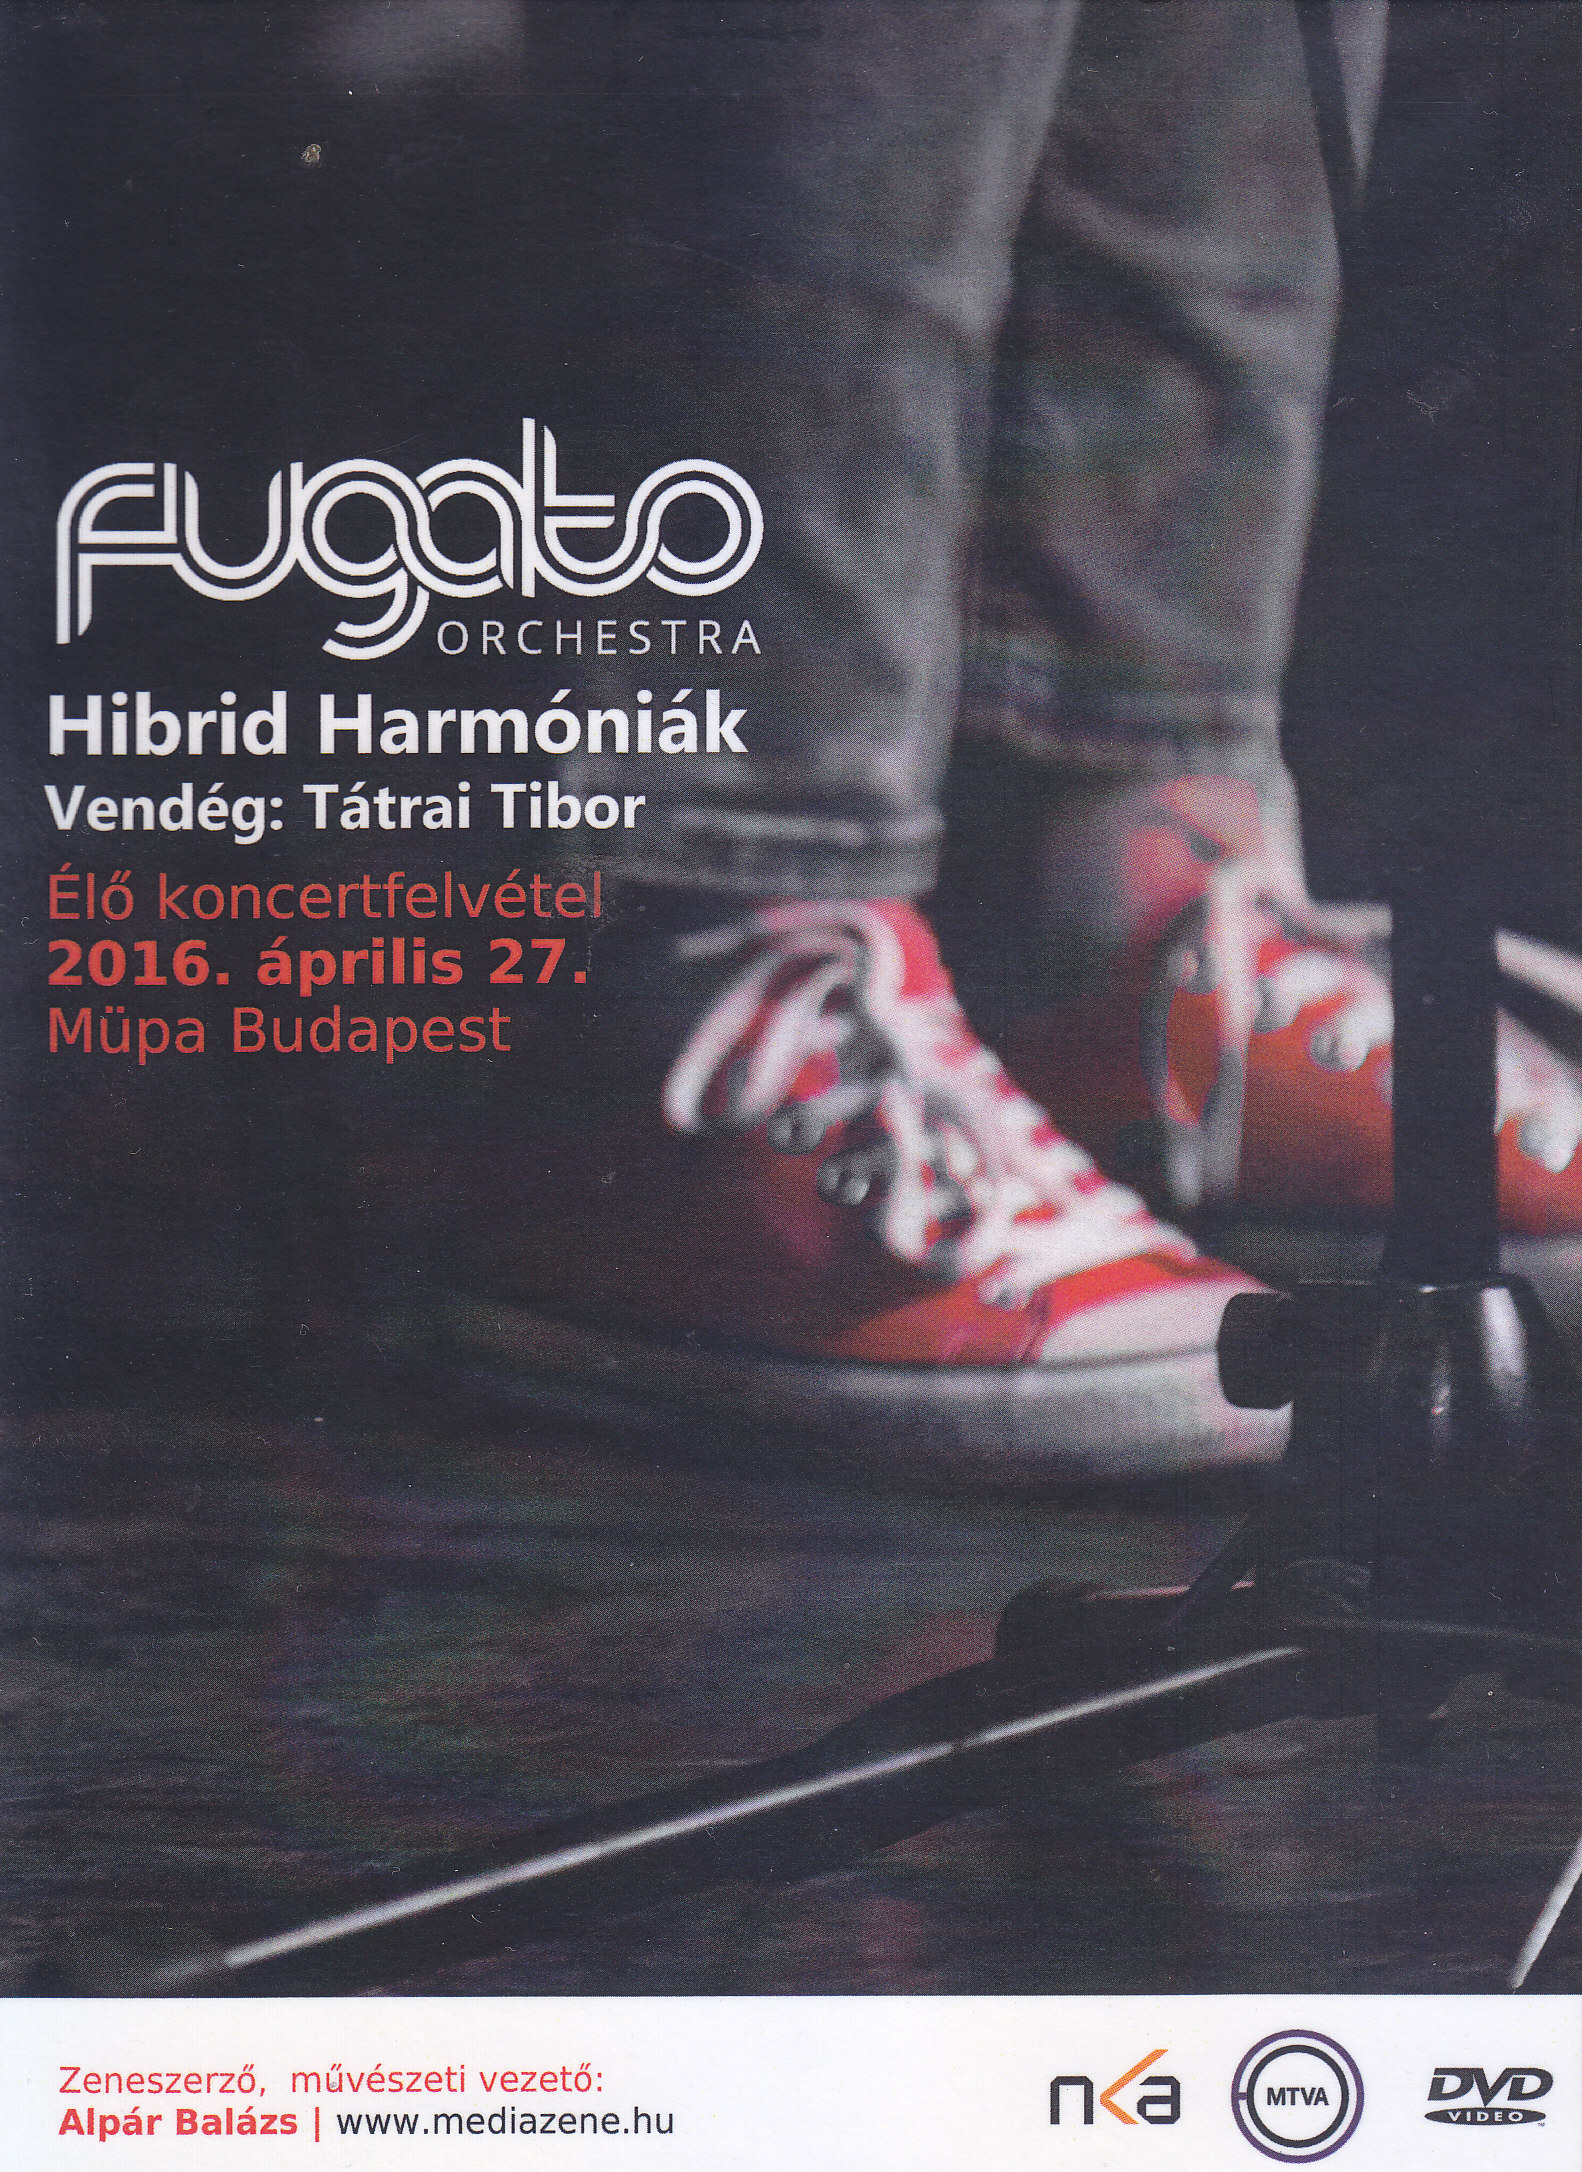 Fugato Orchestra - Hibrid harmóniák - Live